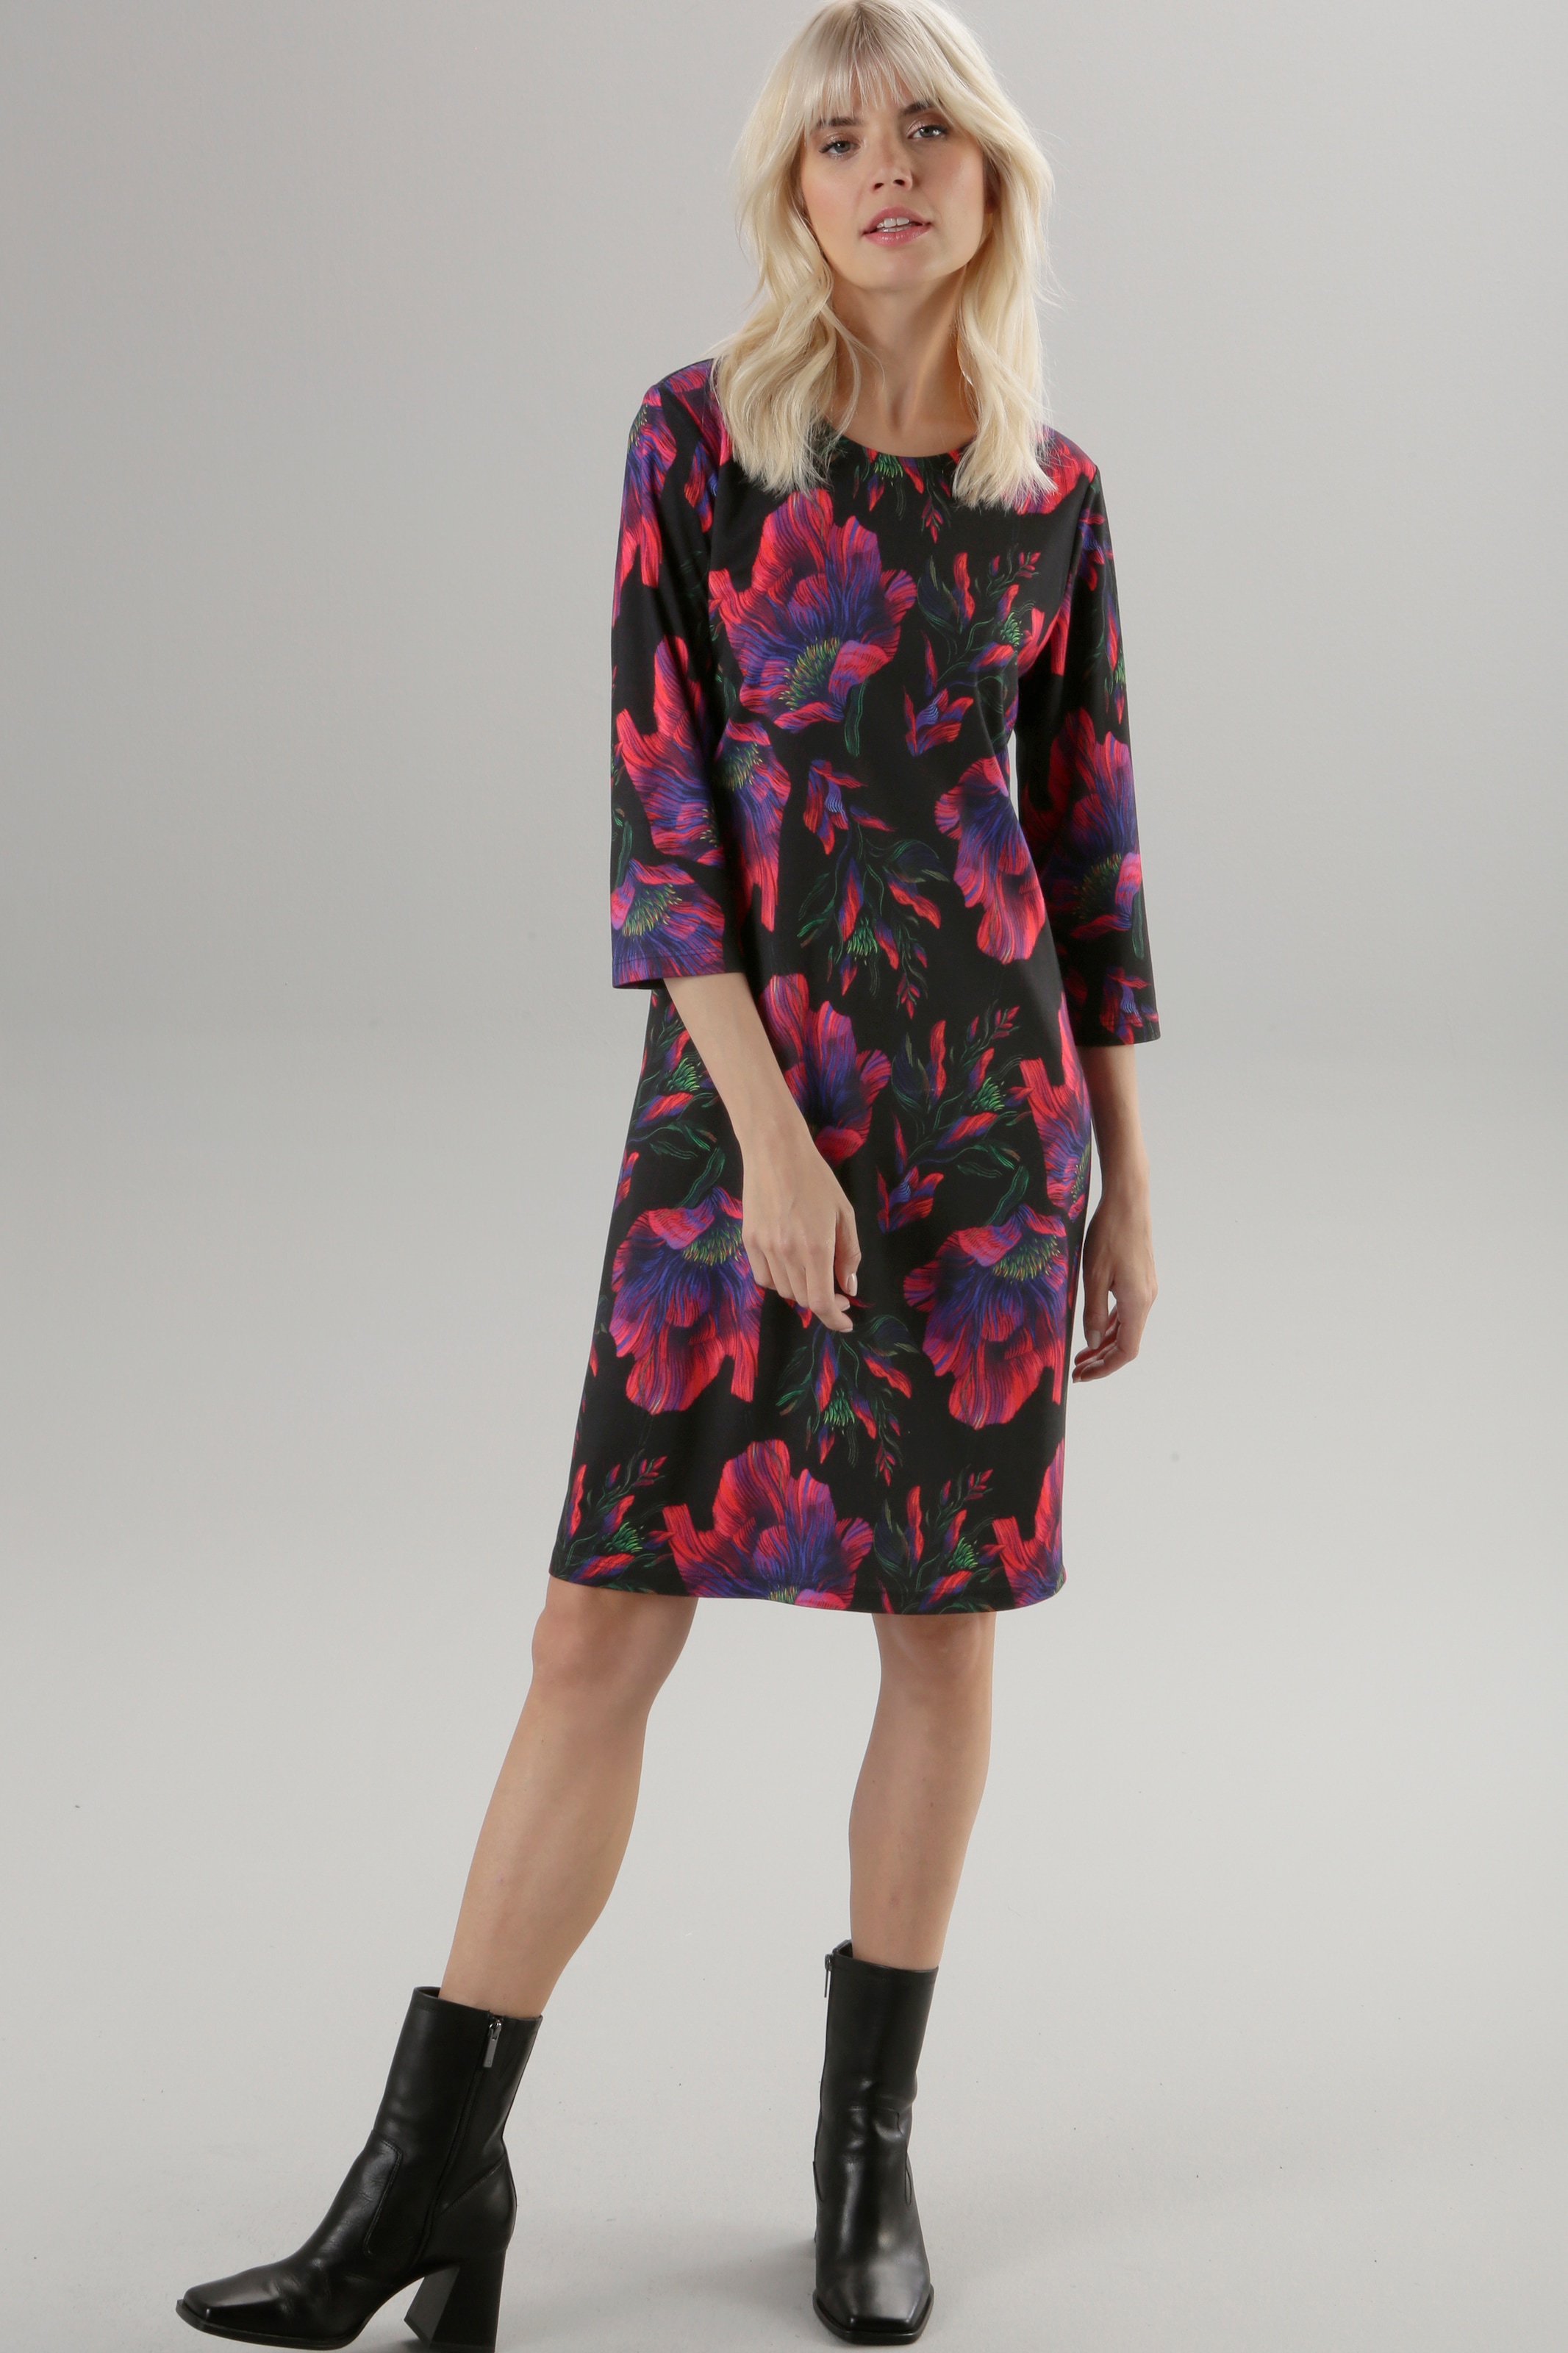 Blumendruck mit Jerseykleid, SELECTED in Aniston kaufen Knallfarben